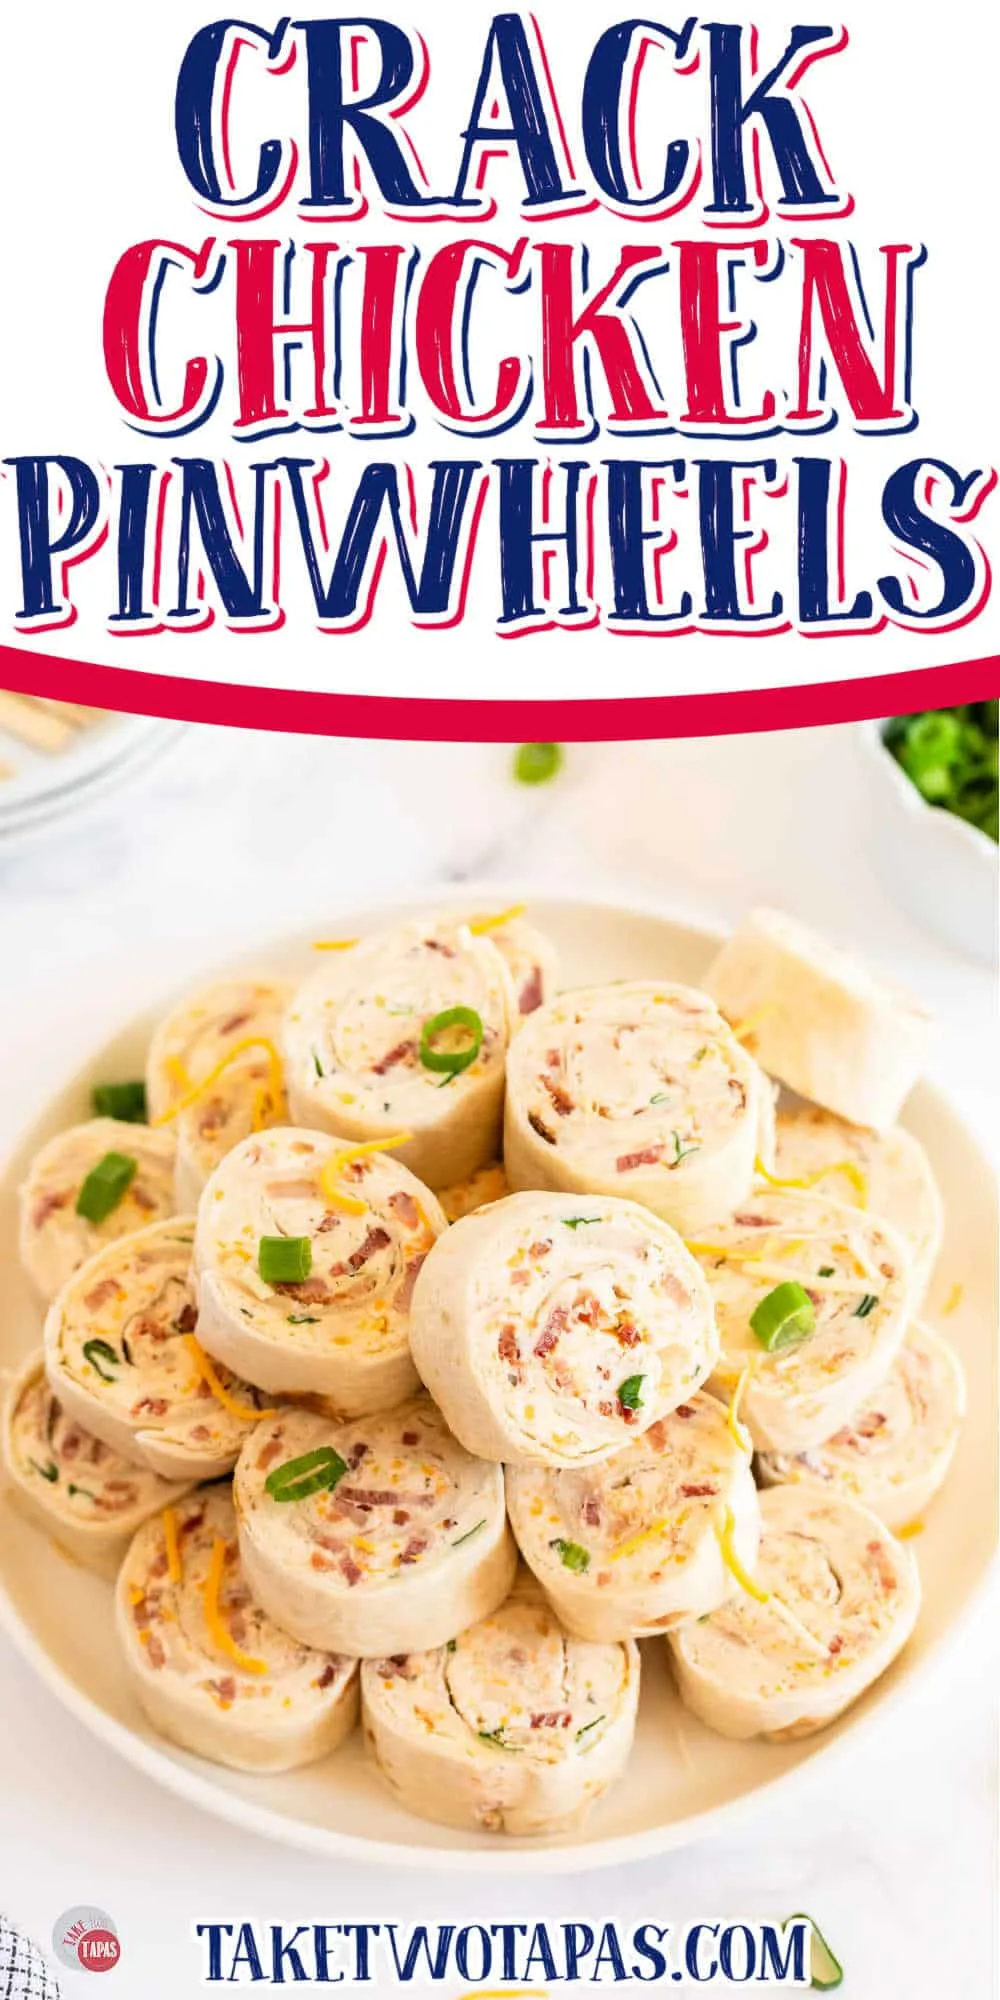 plate of pinwheel sandwiches